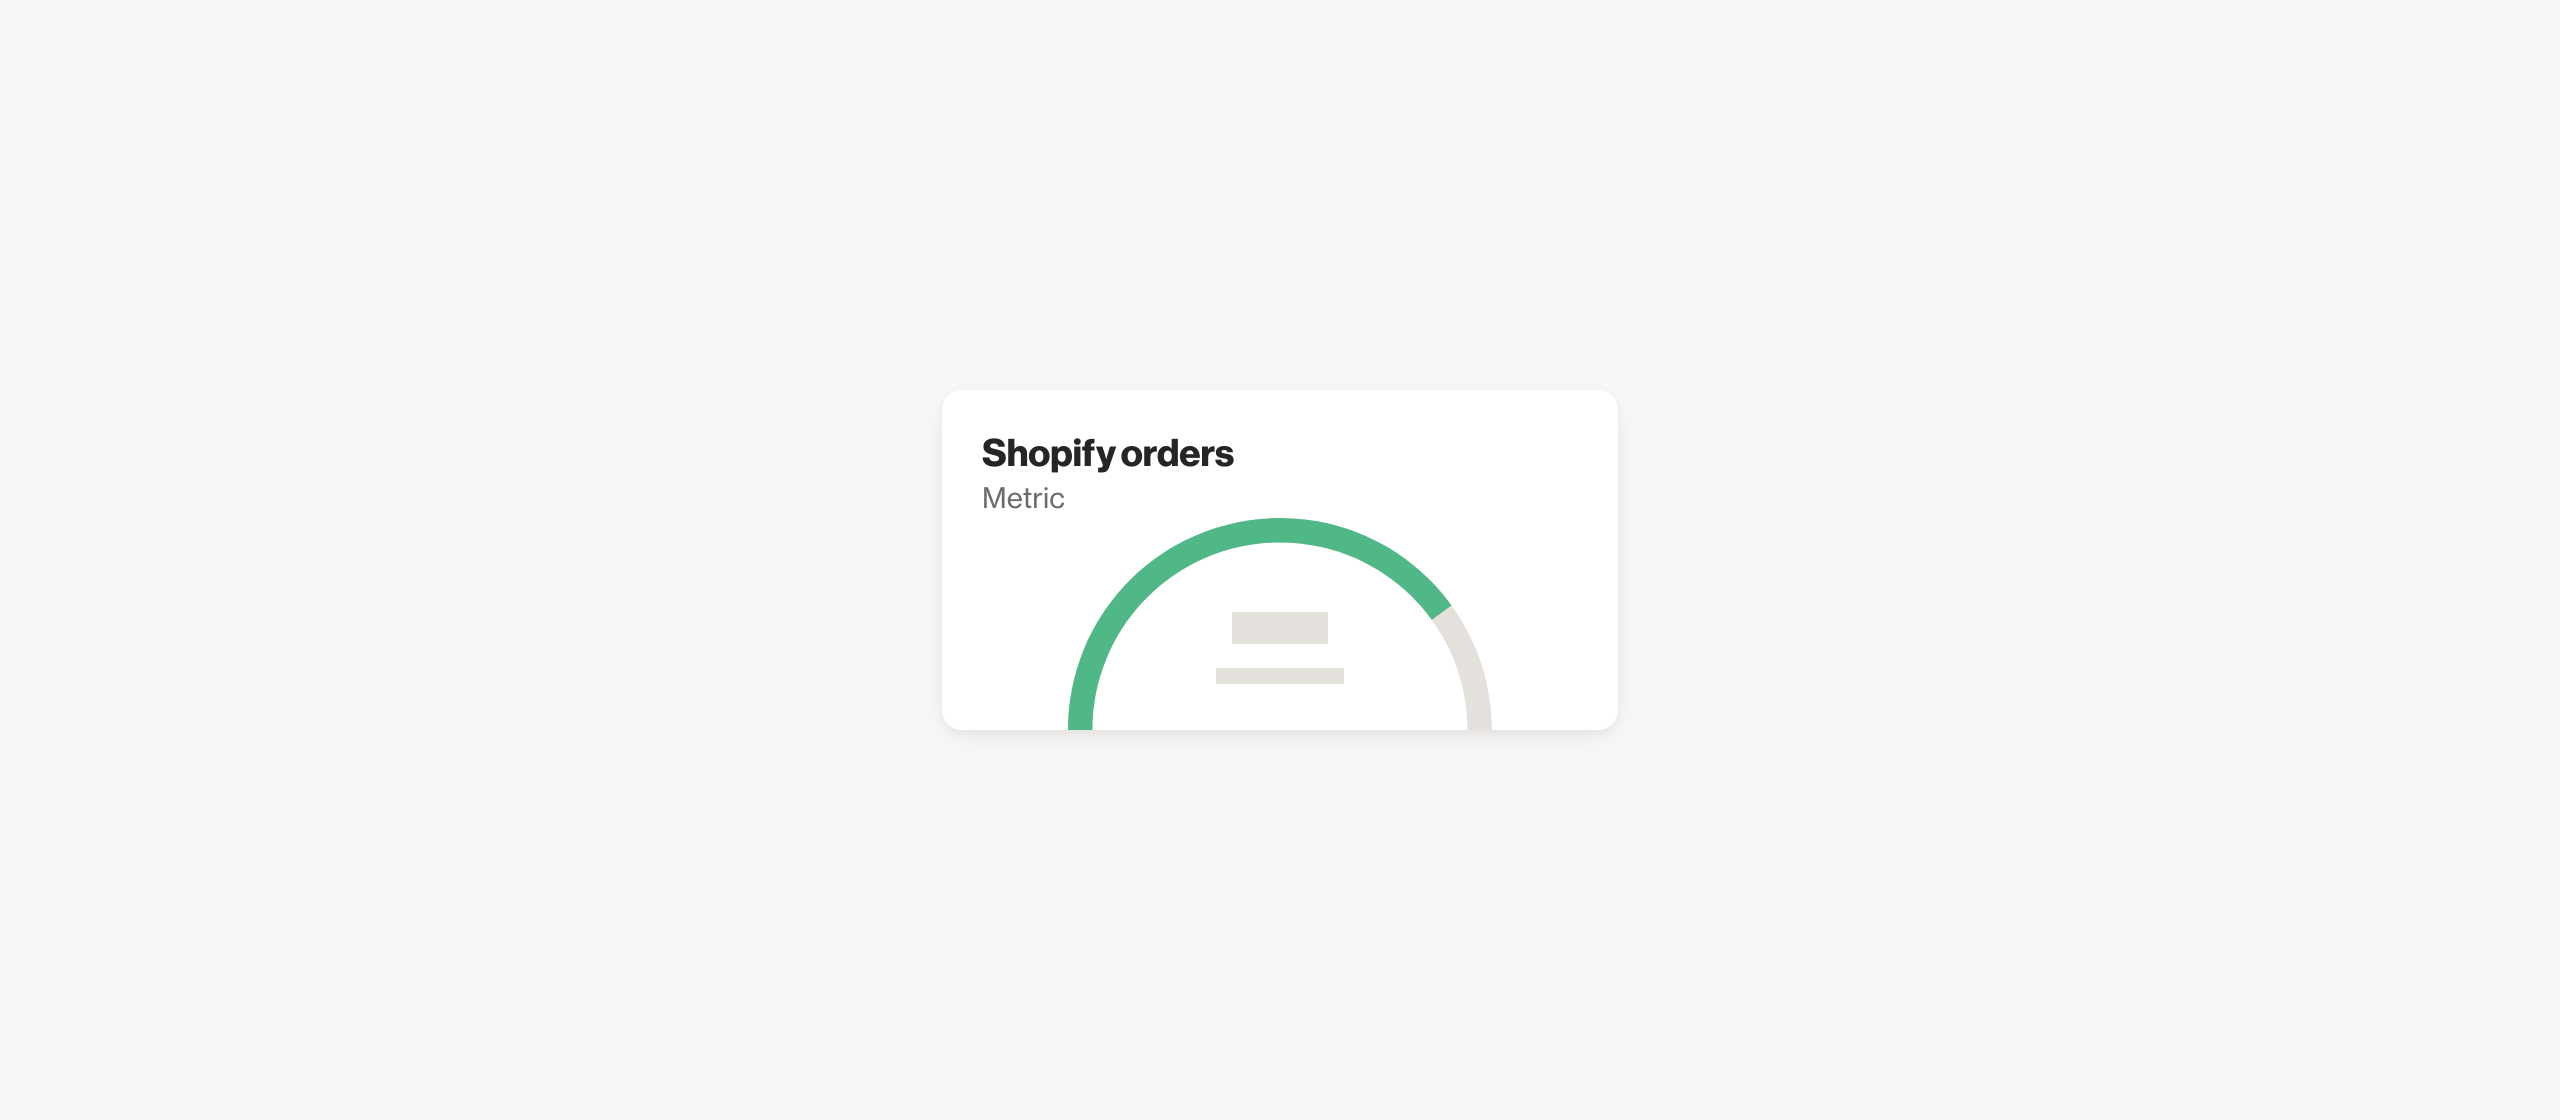 Shopify orders metric